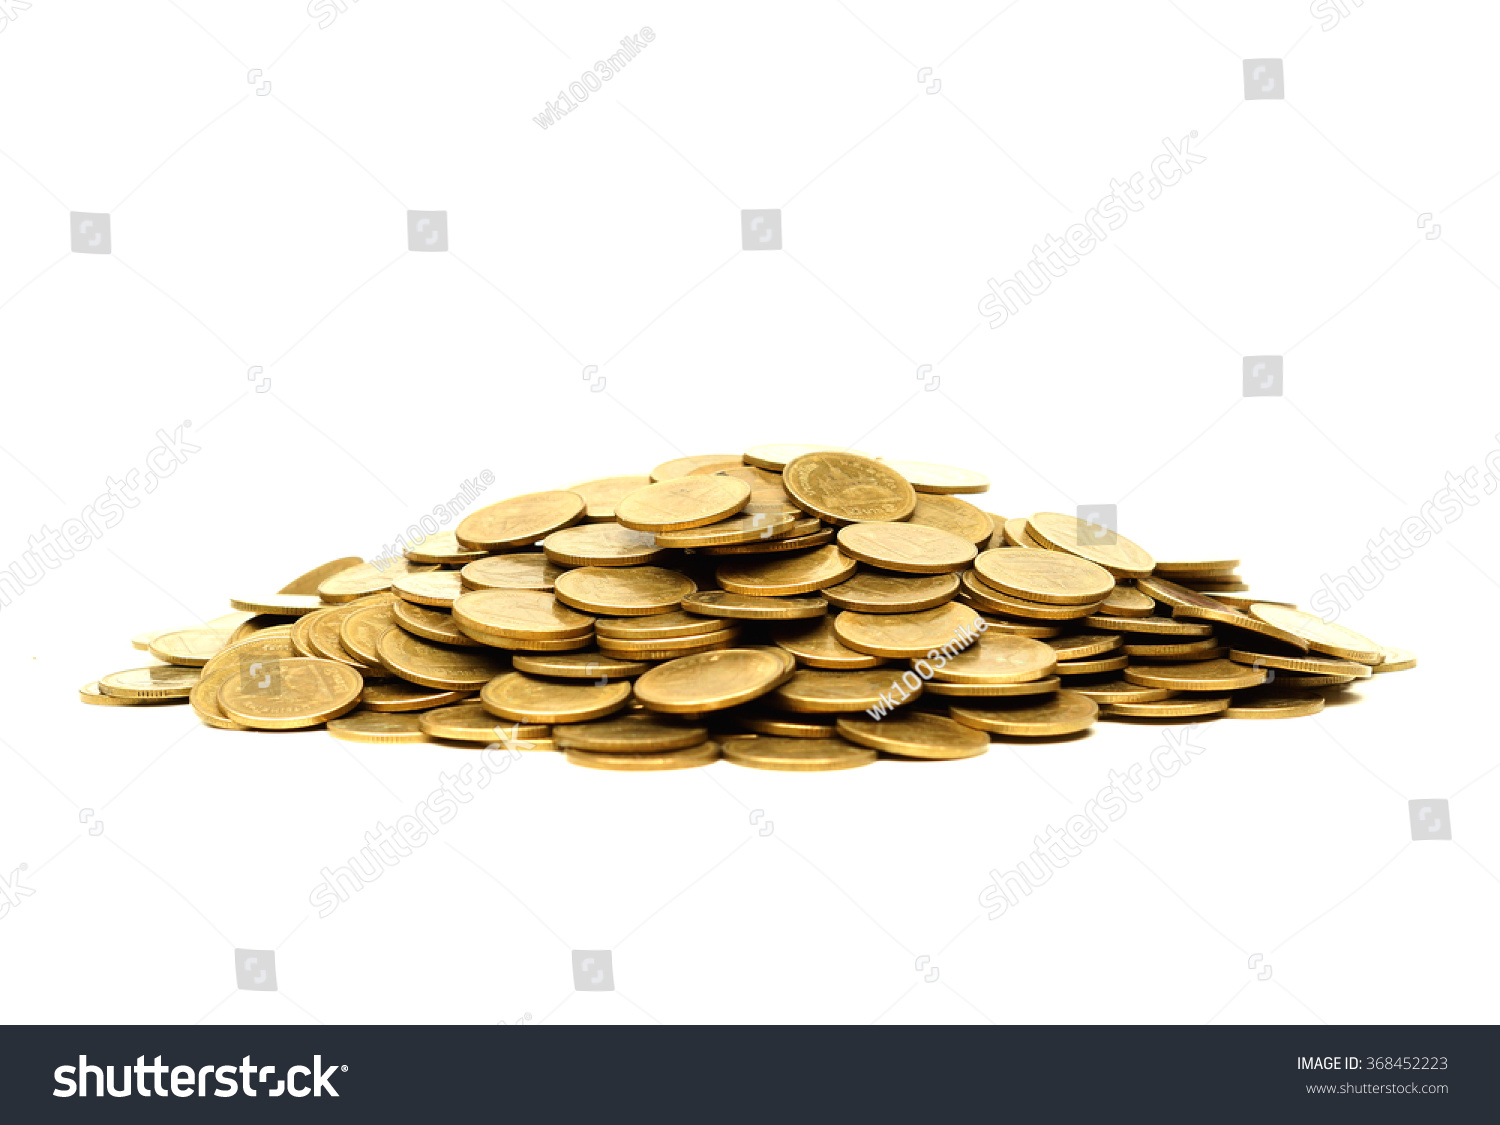 A pile of golden coins        #368452223